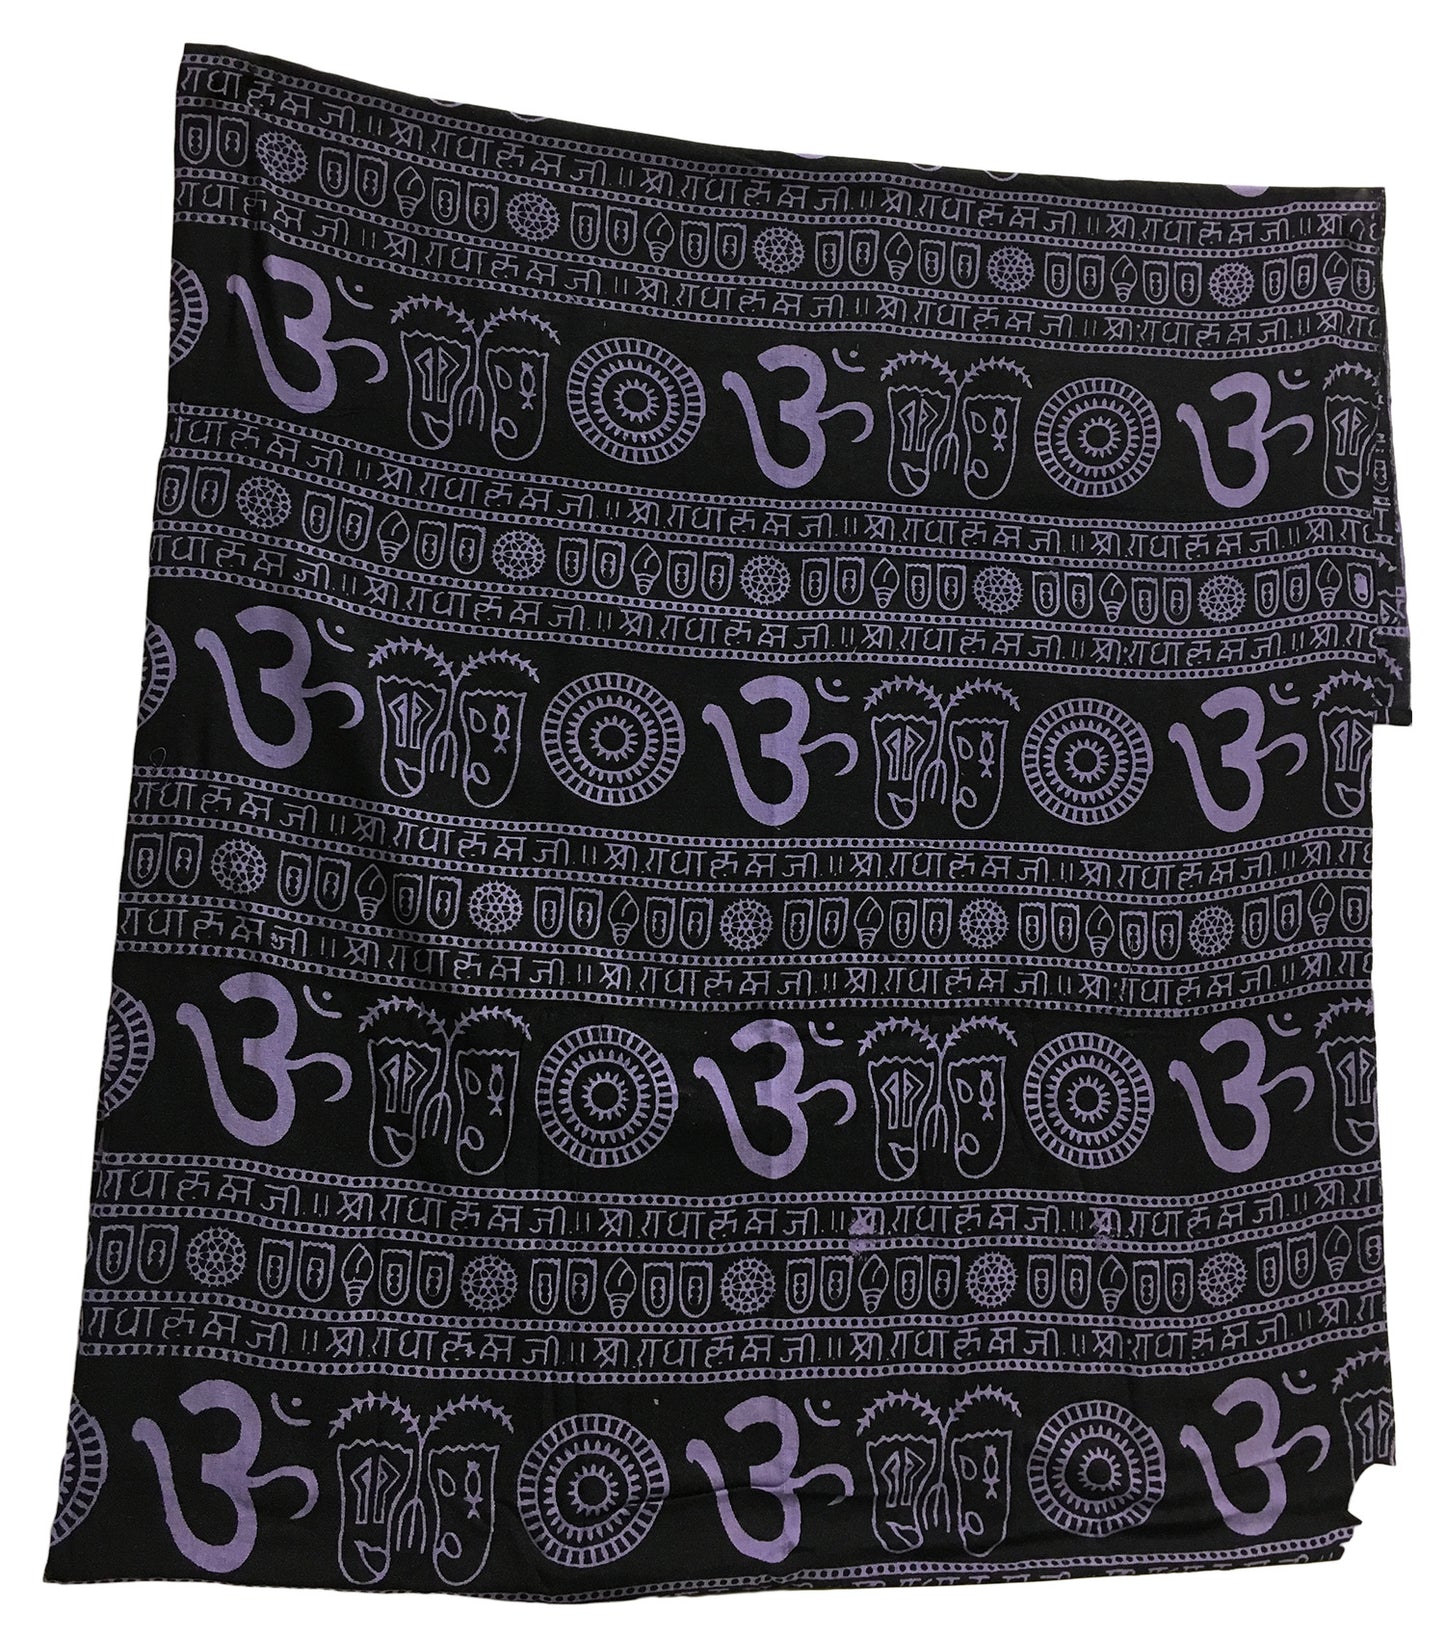 Indian Cotton Om Yoga Meditation Tapestry Throw Queen Size Bedspread - Ambali Fashion Tapestries beach, bohemian, boho, casual, coverlet, curtain, decor, decoration, dorm, ethnic, gypsy, hipp